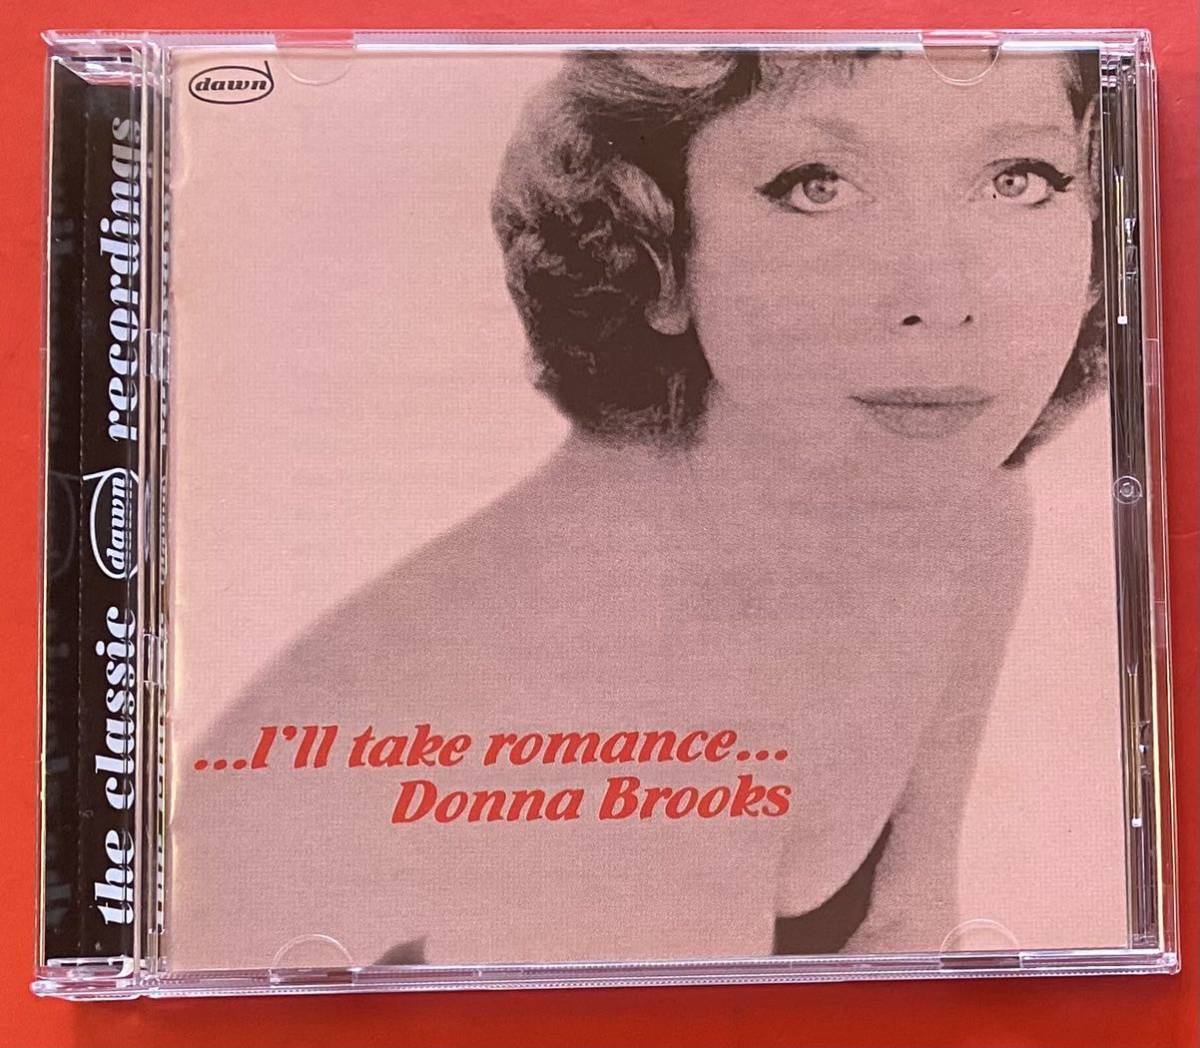 【CD】Donna Brooks「...I'll take romance...」ドナ・ブルックス 輸入盤 [07090209]_画像1